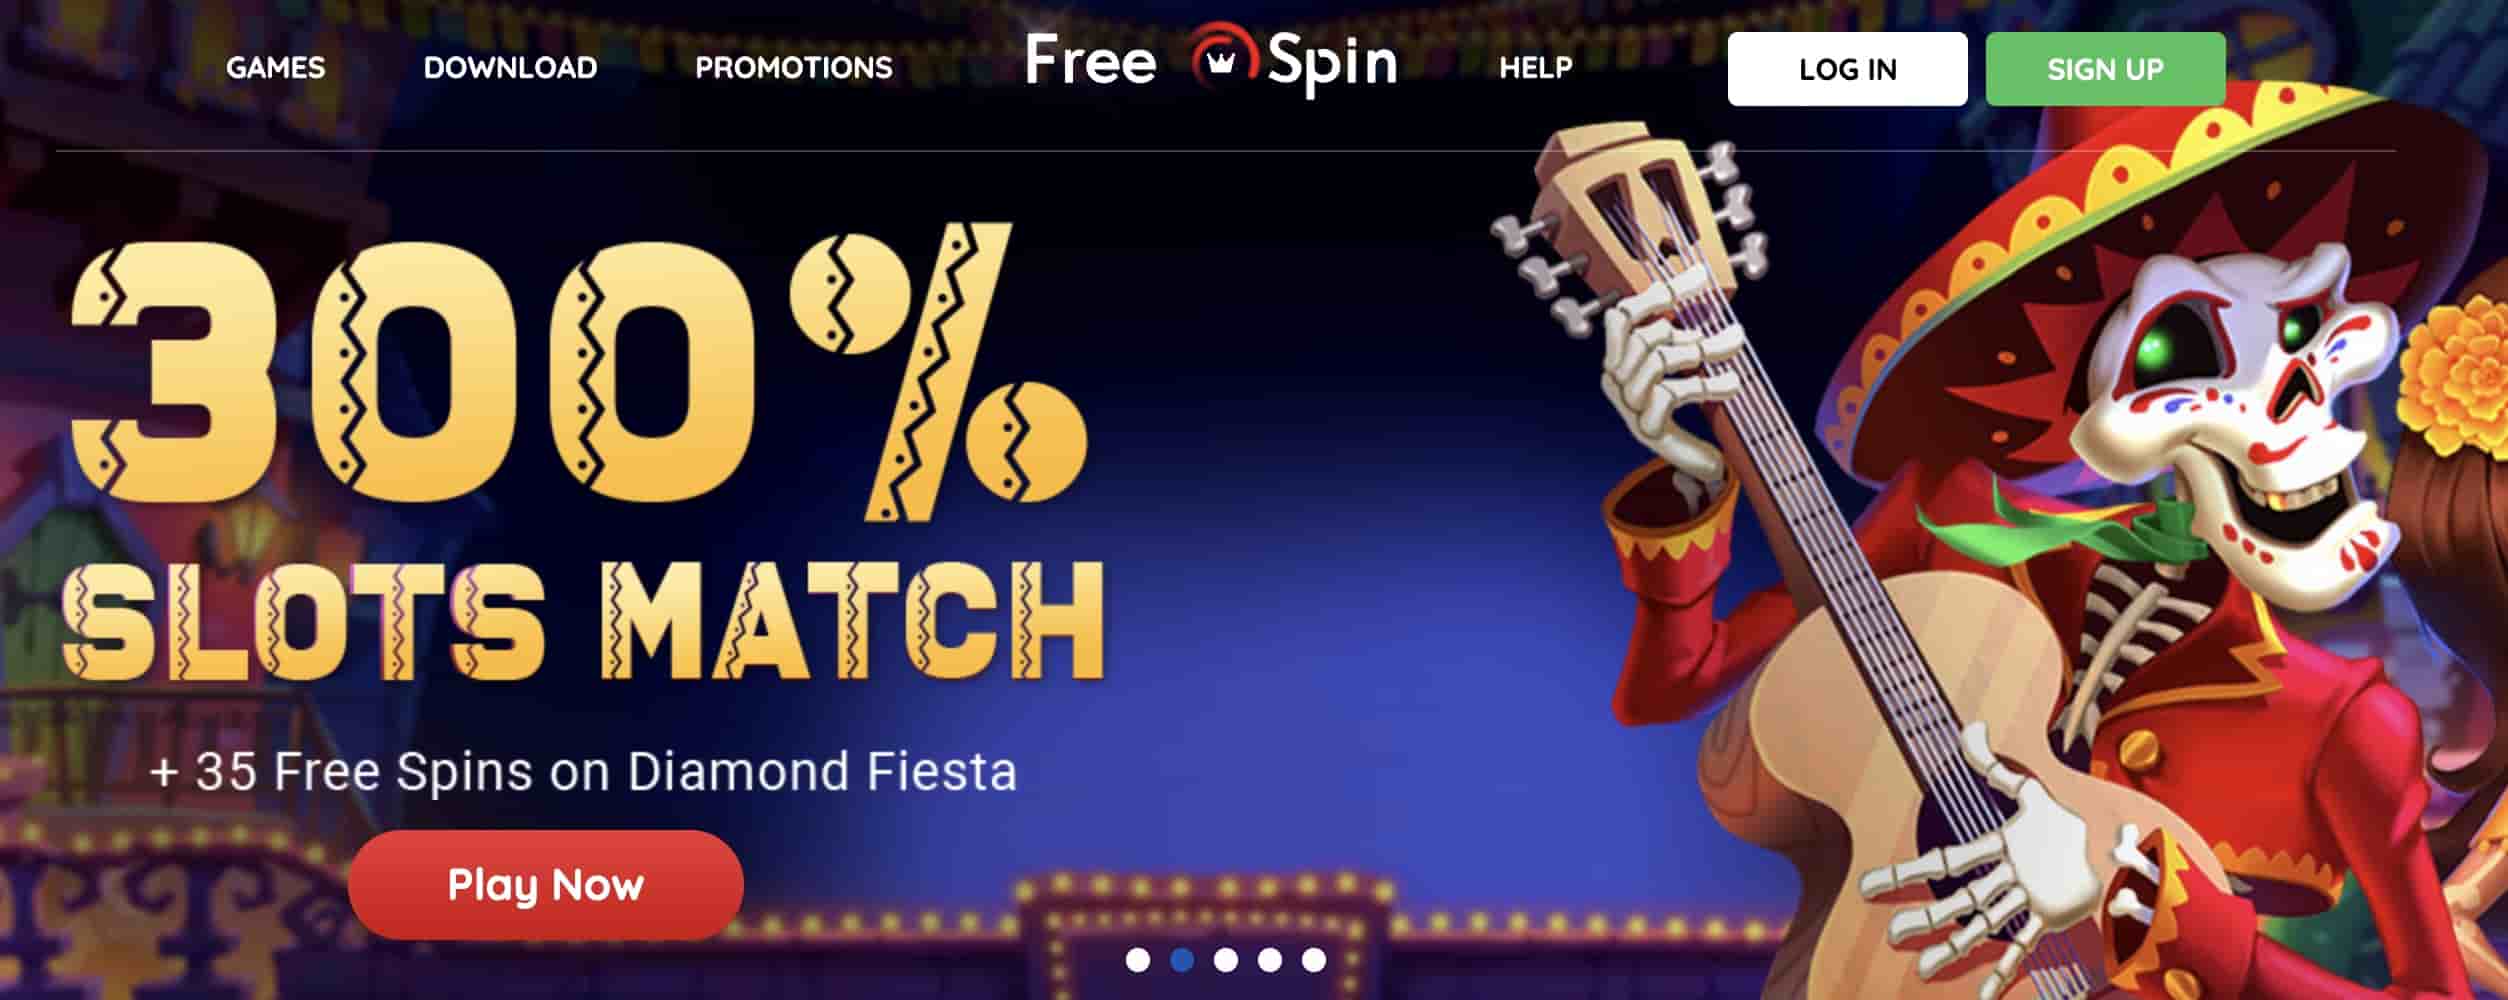 Free Spin Slot Rennen Bonus